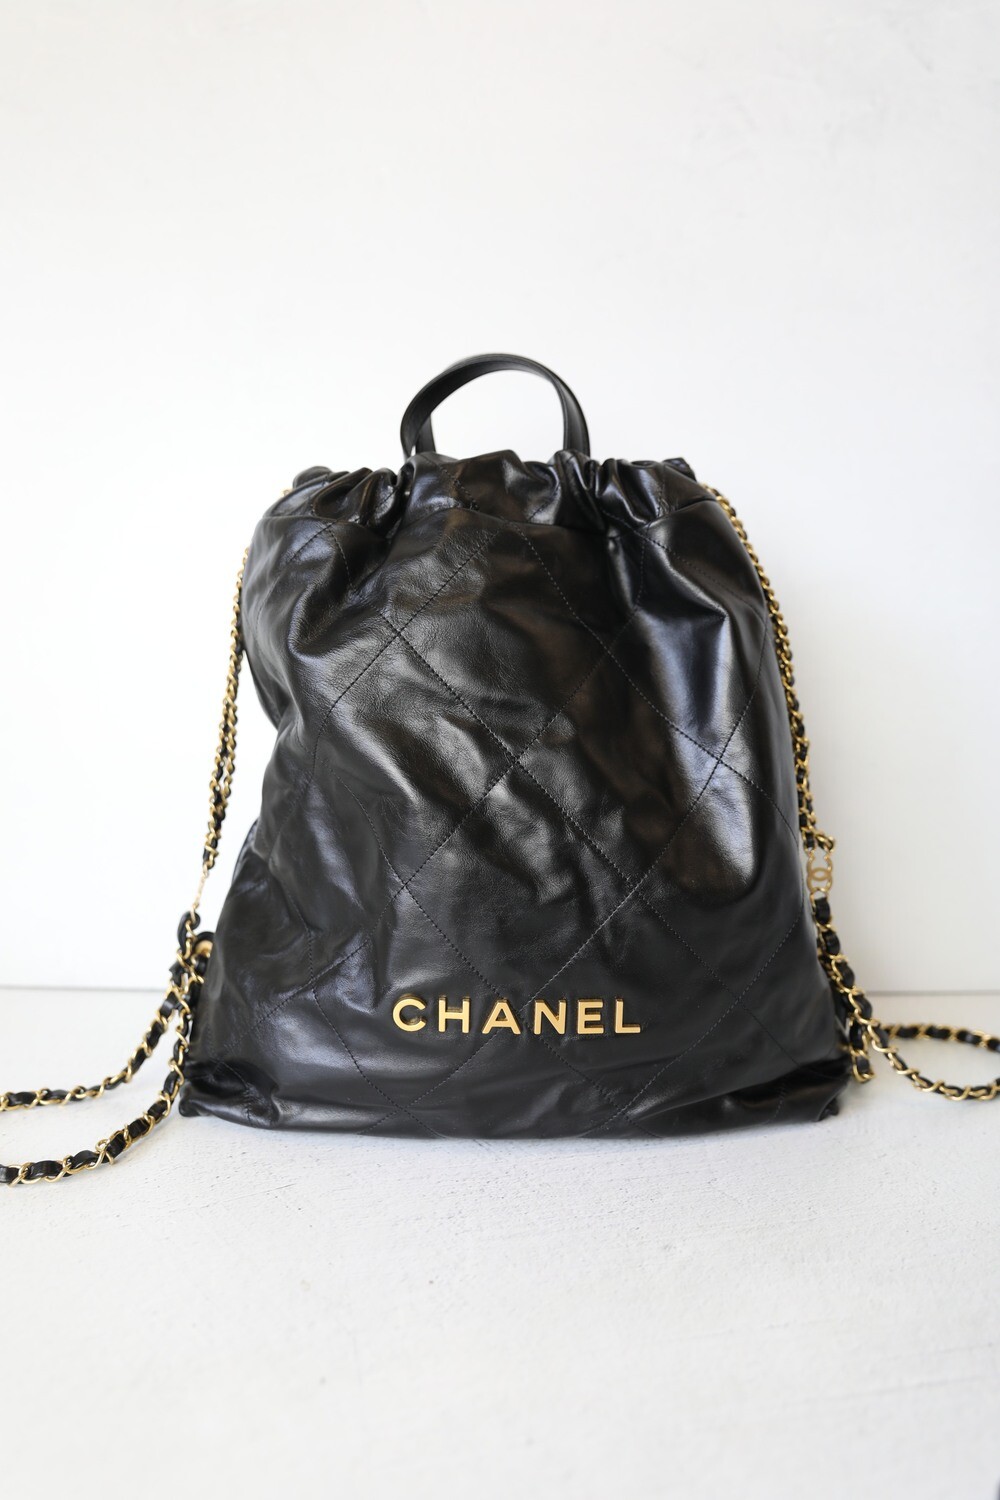 chanel purse backpack black